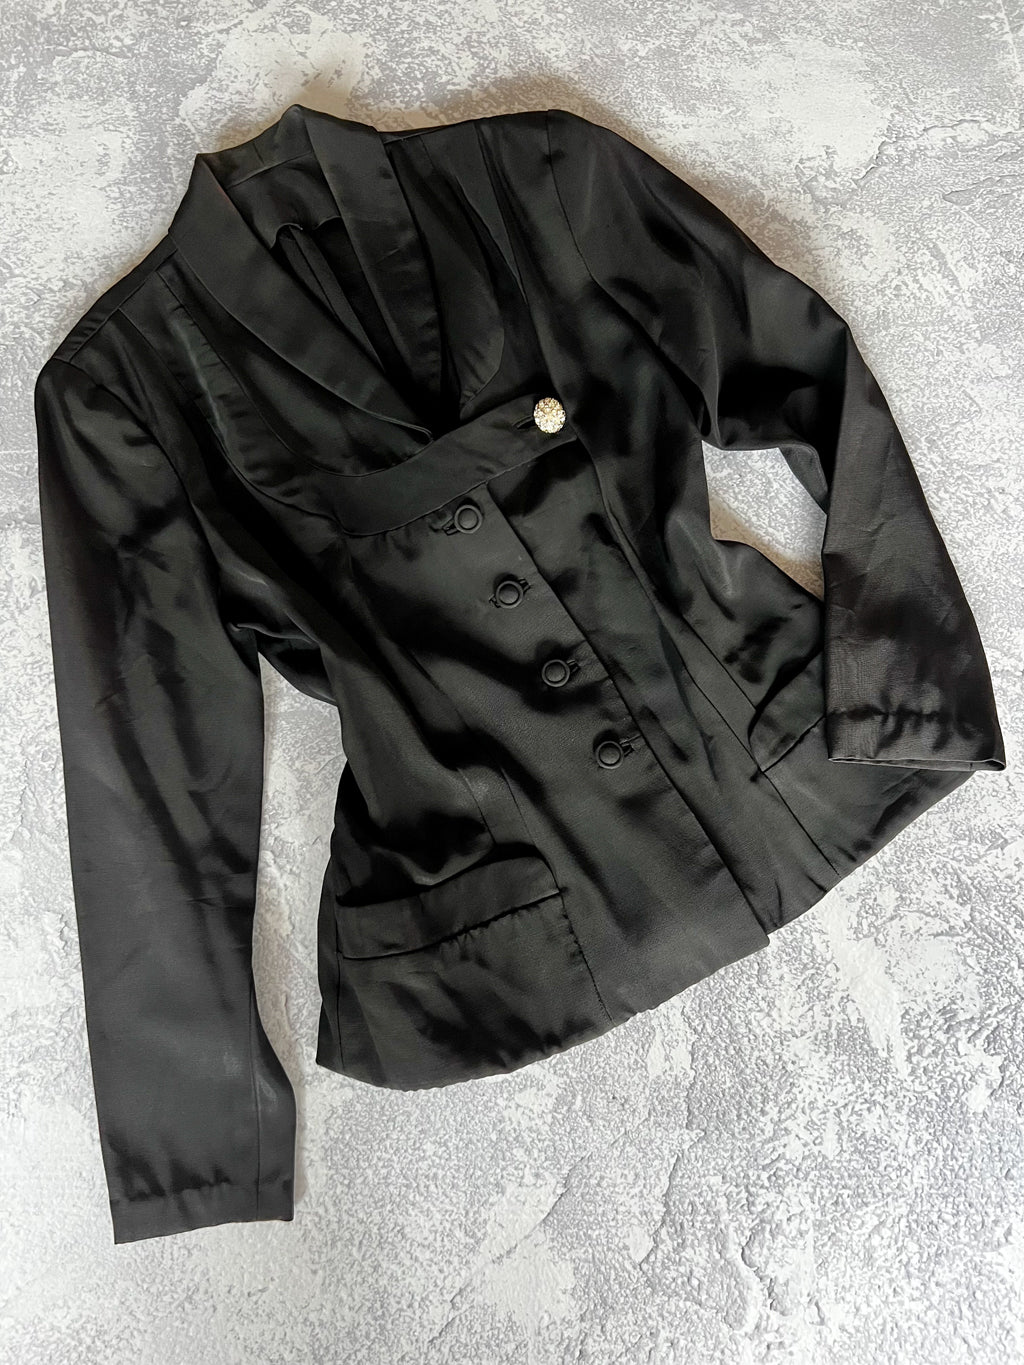 Vintage 1940s Black w Bold Rhinestones Jacket - Strong Shoulder Faille Suit Blazer Size M to L